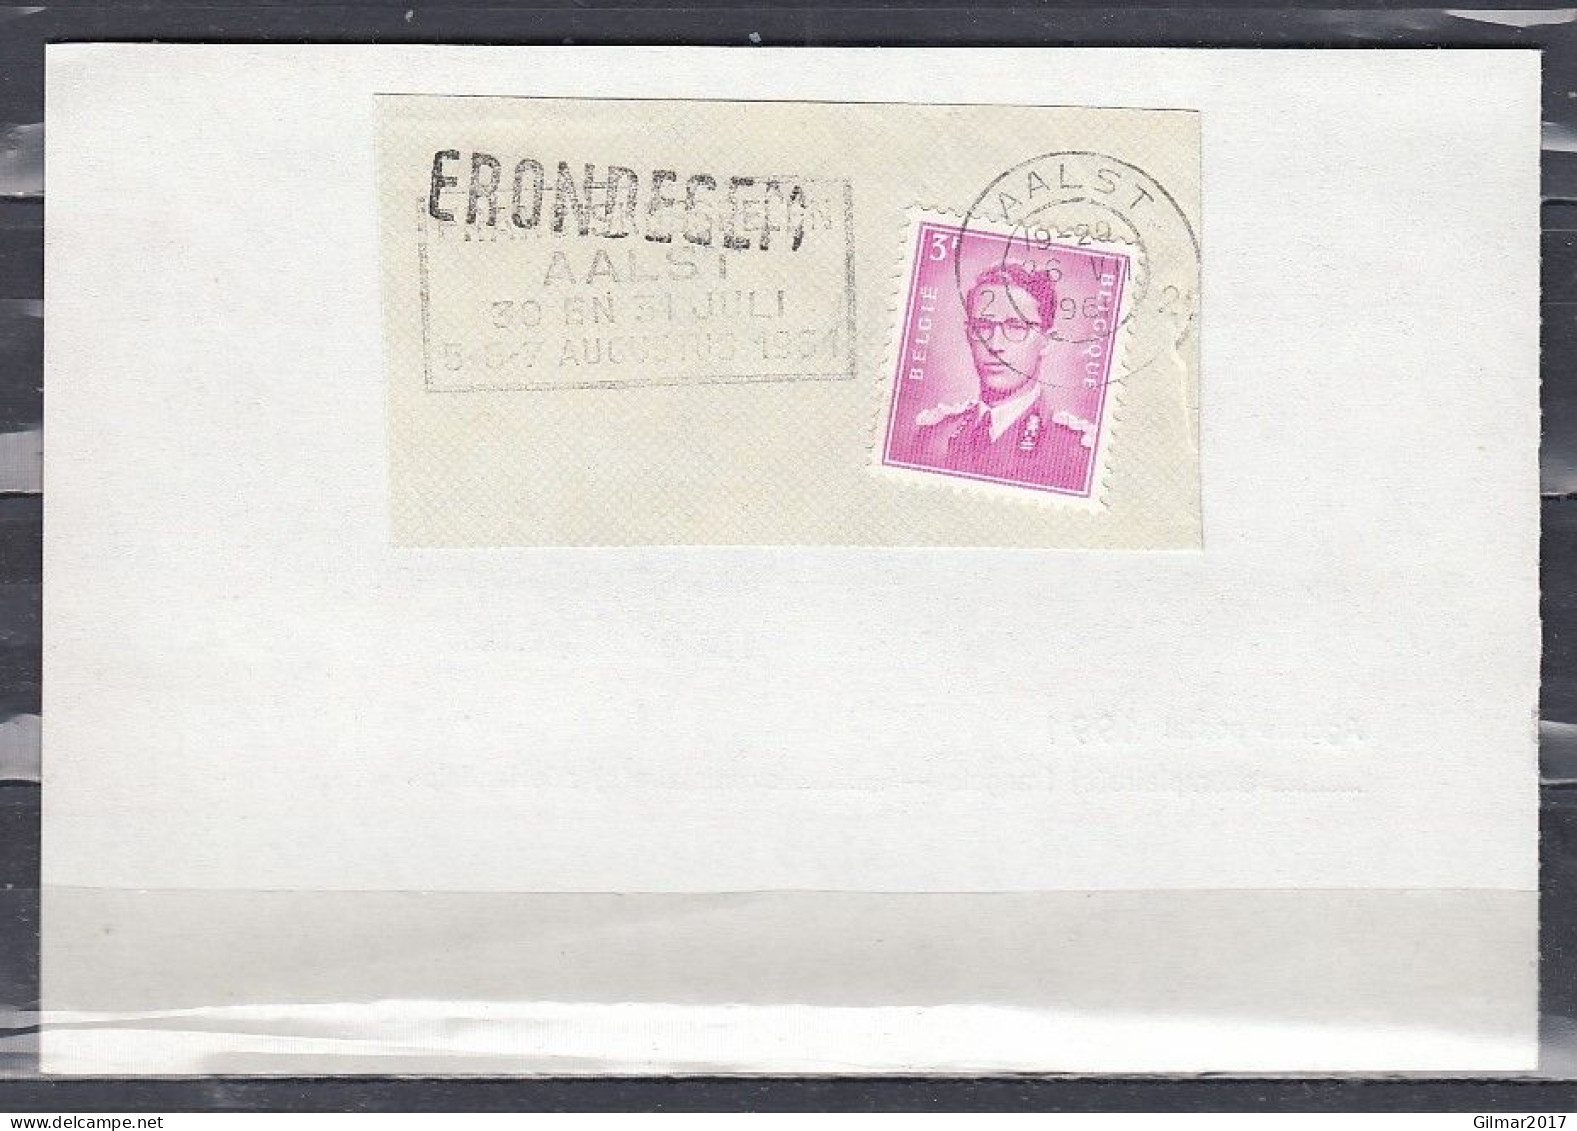 Fragment Van Aalst Met Langstempel Erondegem - Linear Postmarks